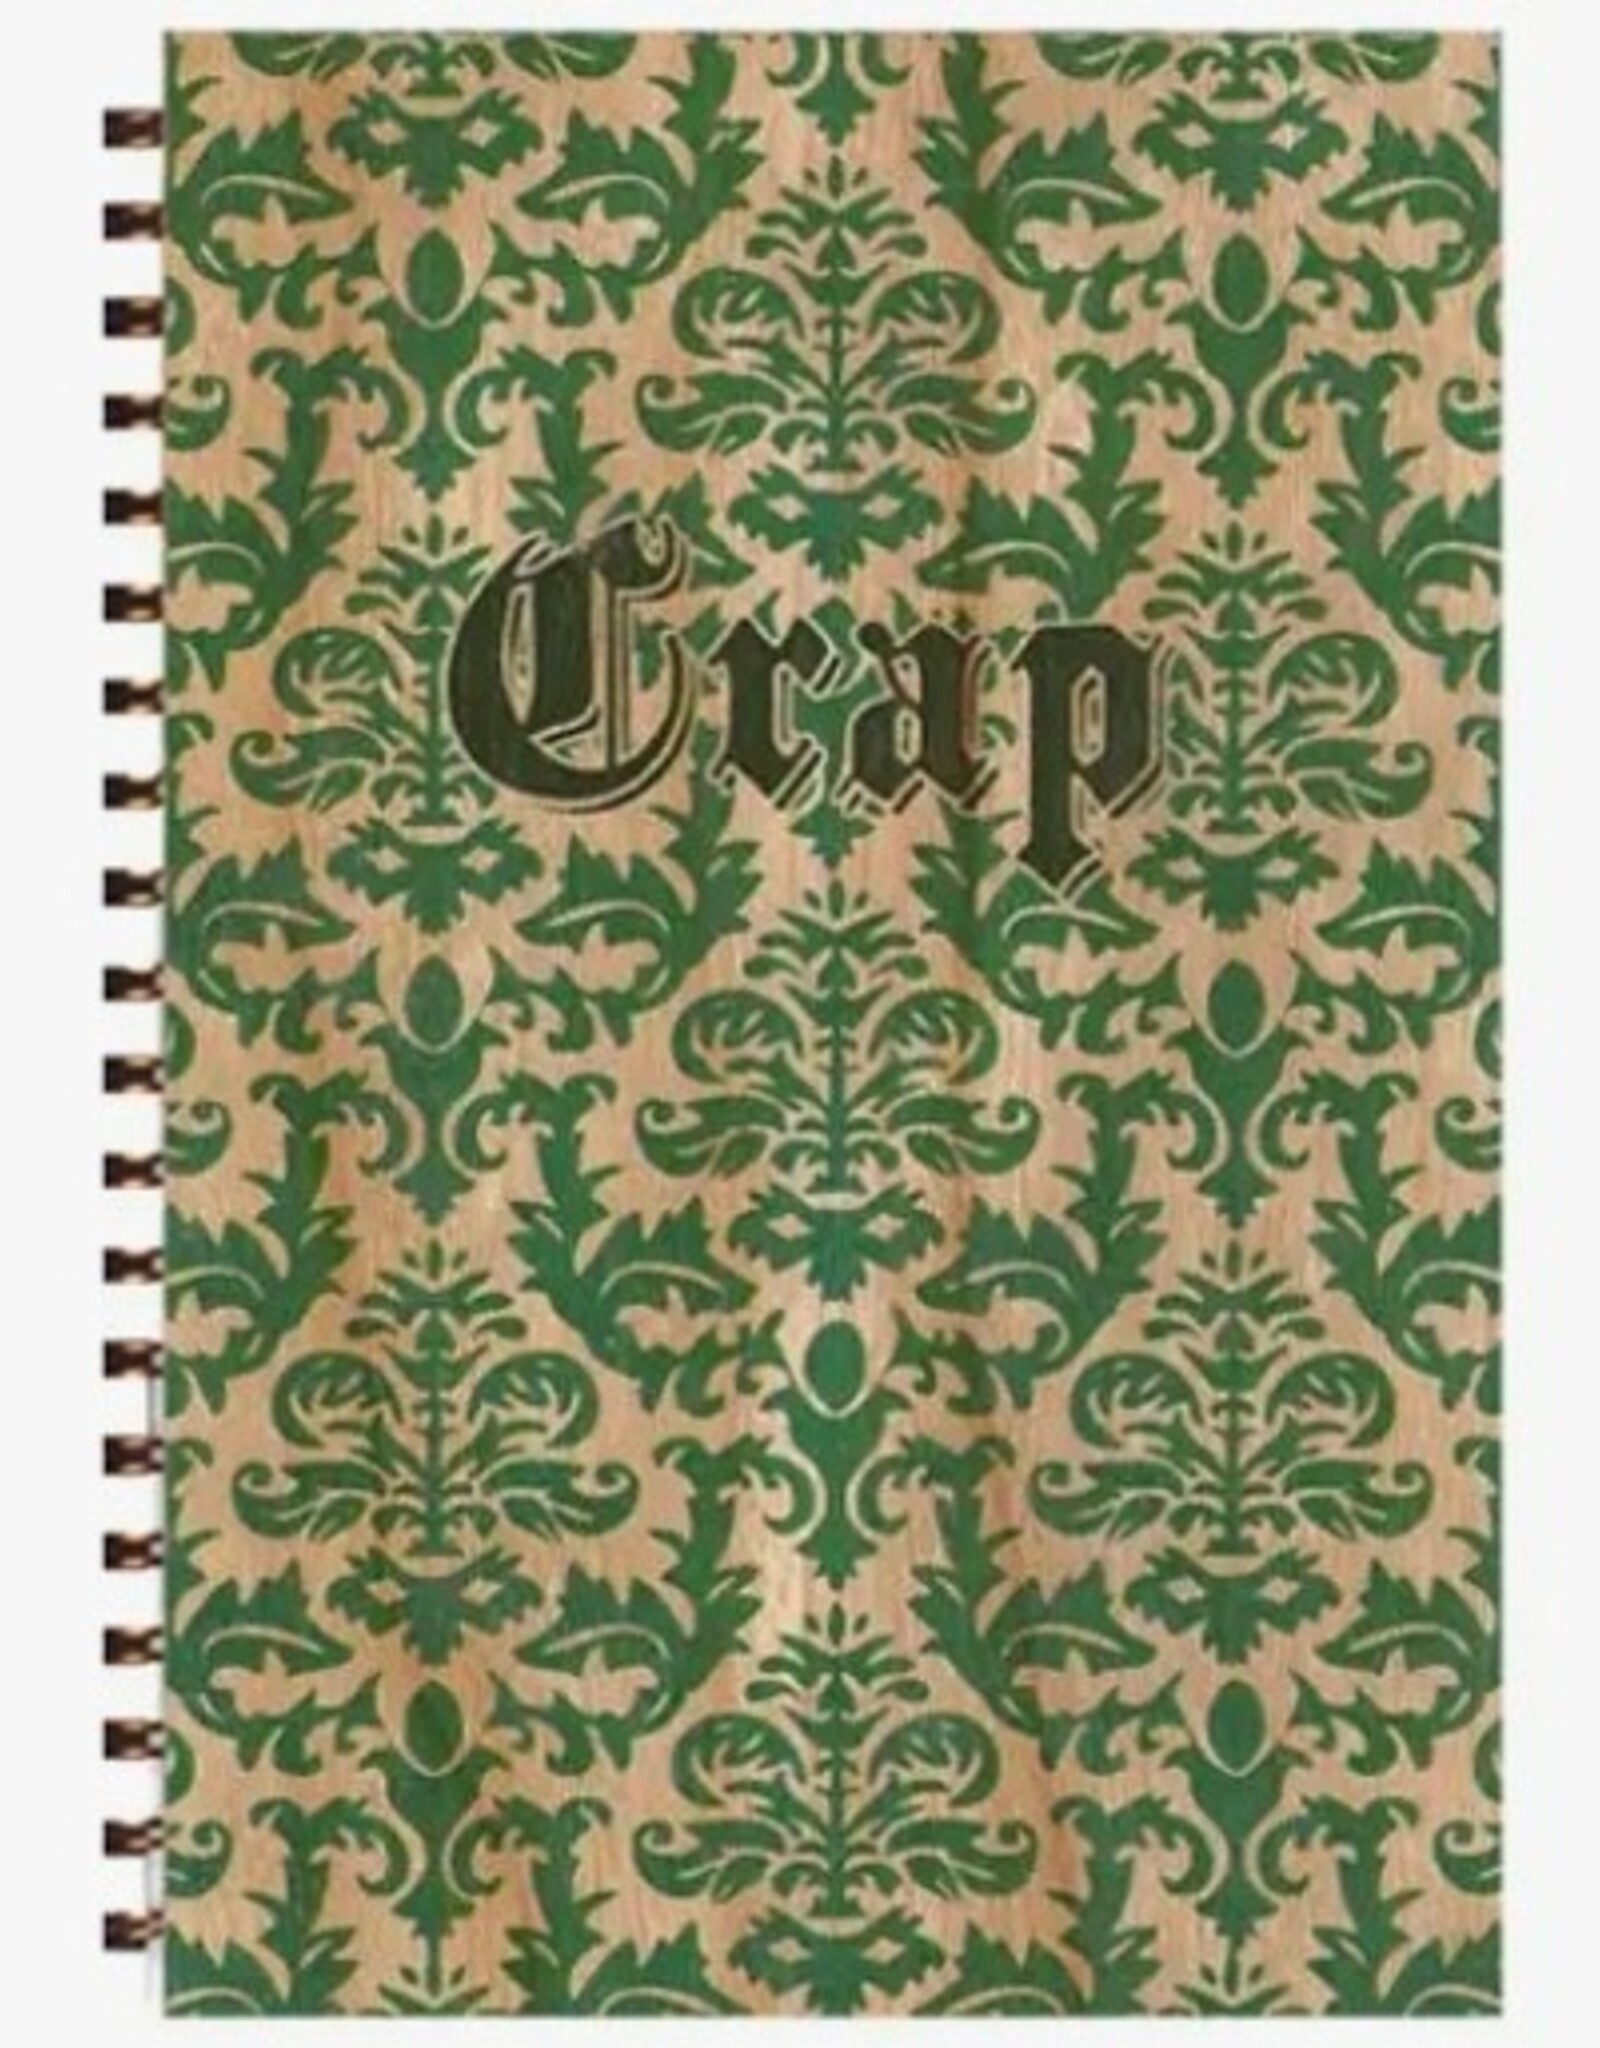 Spitfire Girl Wood Notebook - Crap (Large)